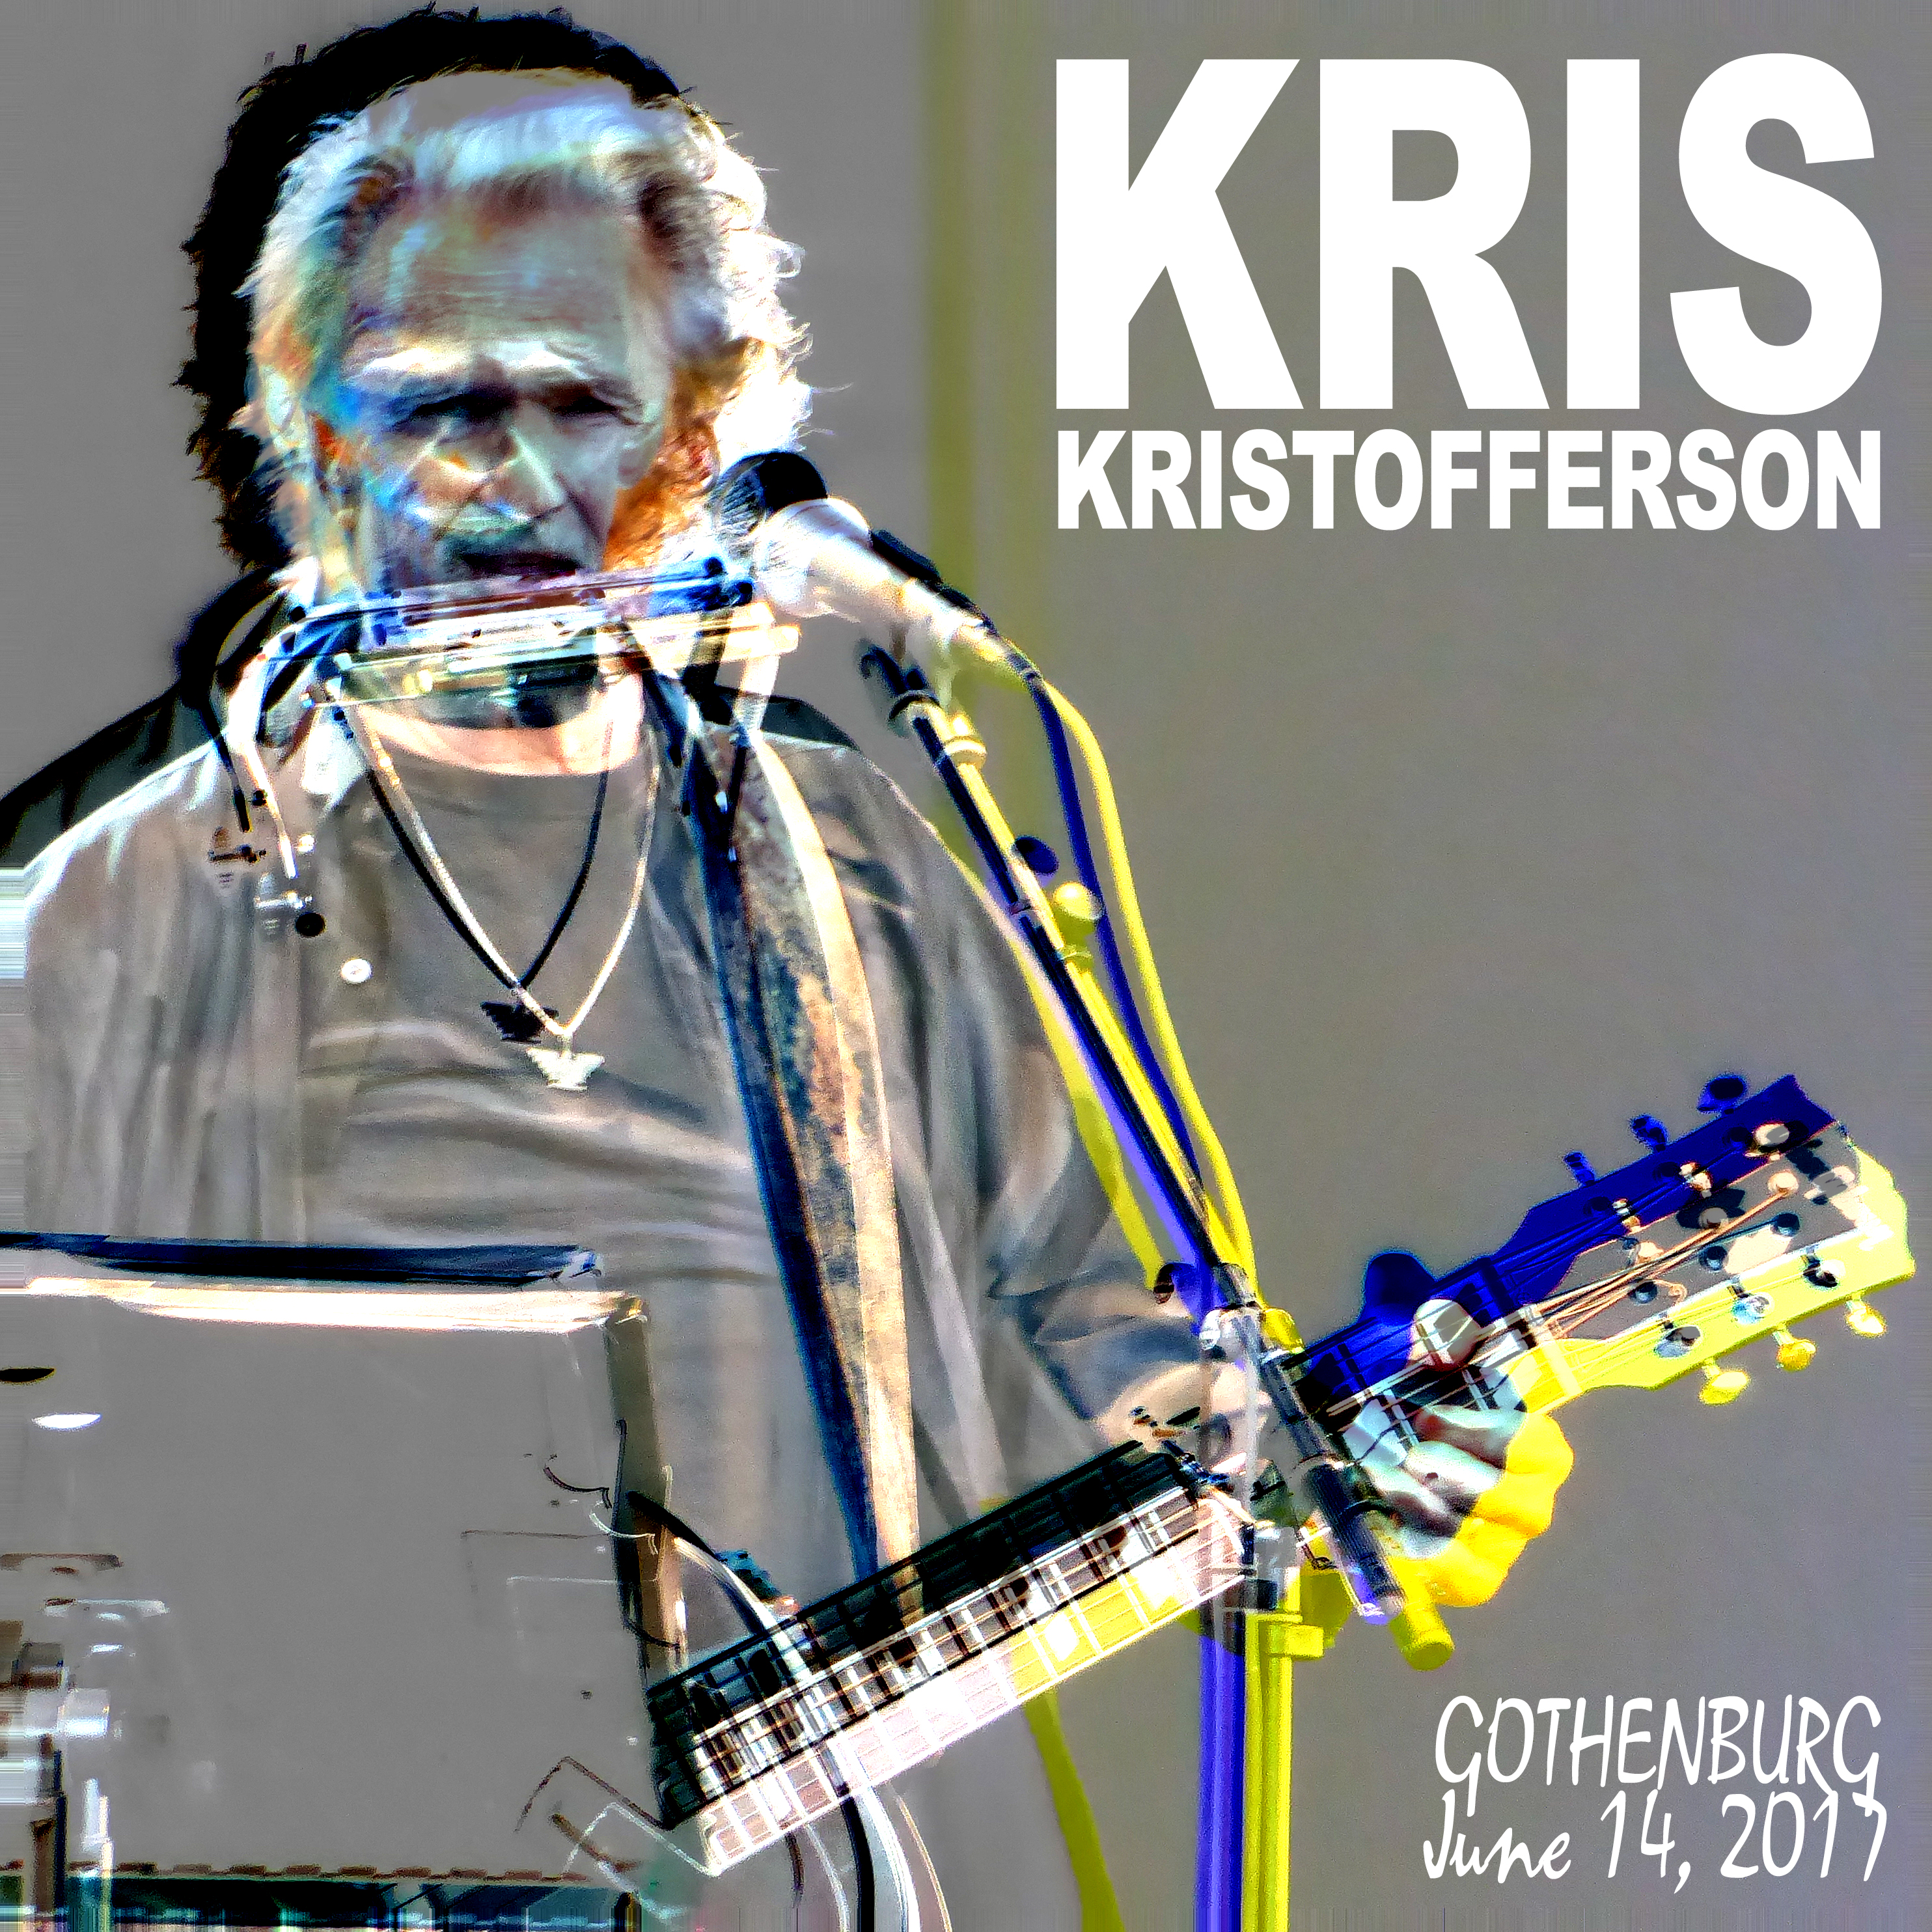 KrisKristofferson2017-06-14LisebergAmusementParkGothenburgSweden (4).jpg